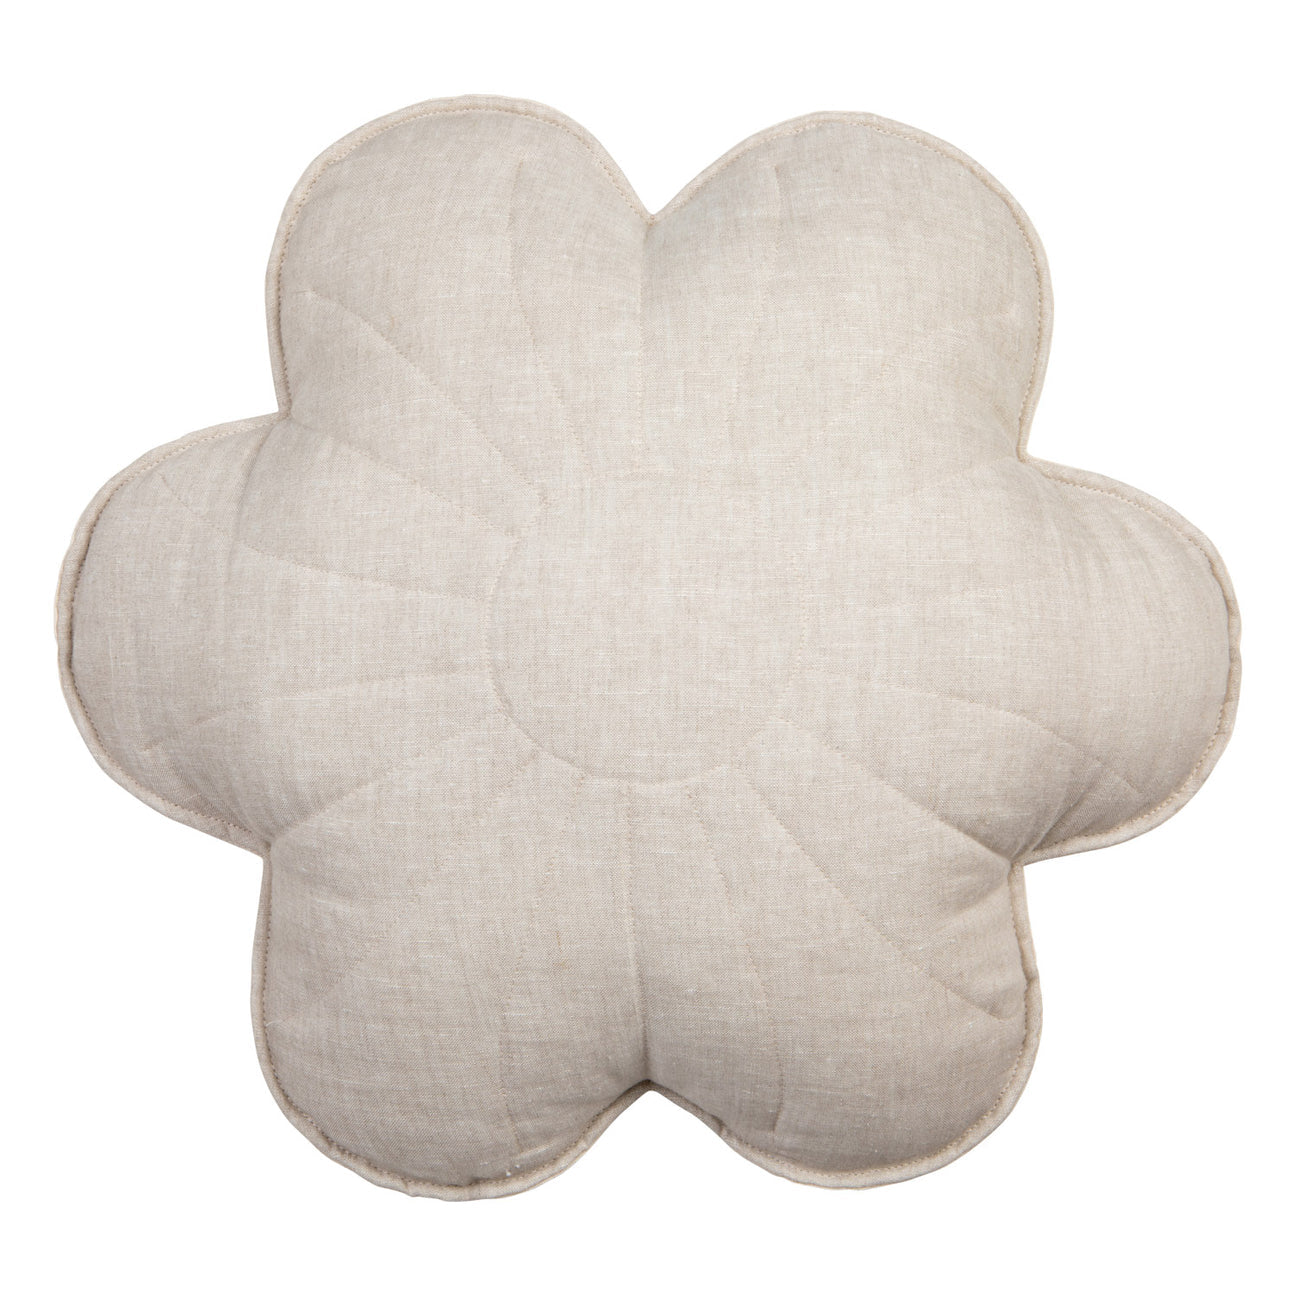 Linen bloom pillow "Sandy lily"